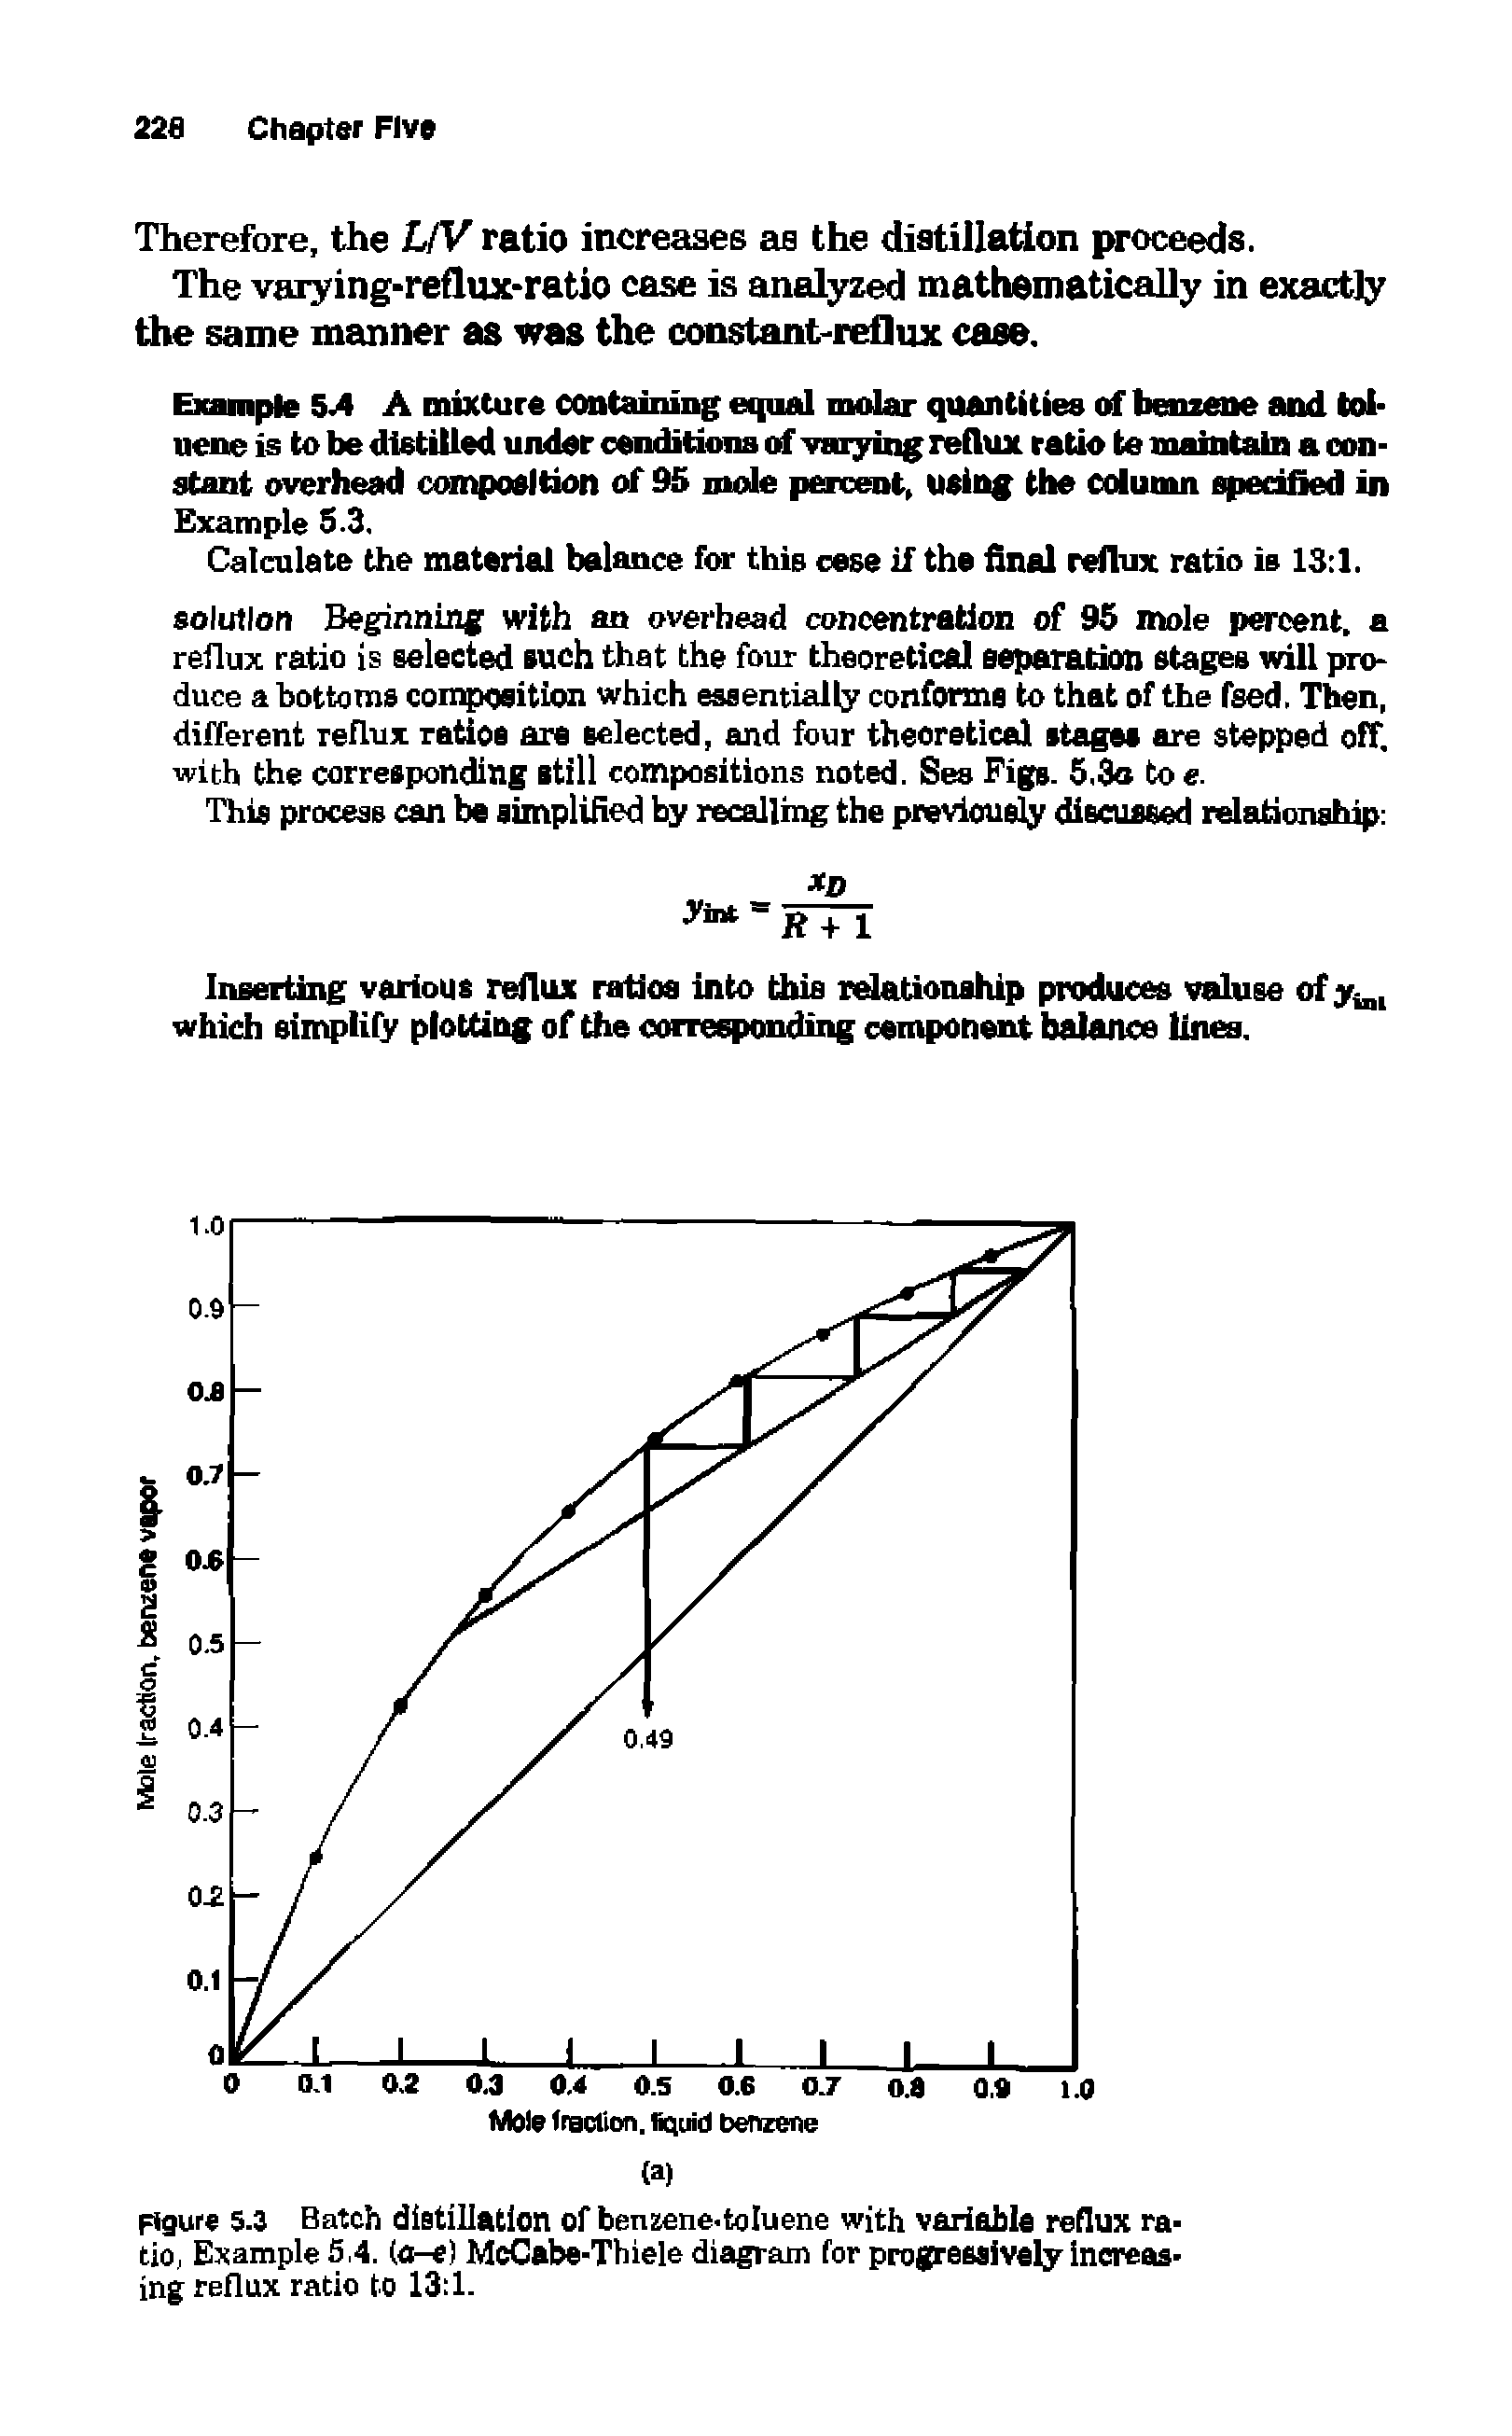 Figure S.3 Batch distillation of benzene-toluene with variable reflux ratio, Example 5,4. ta-e) McCabe-Thiele diagram for progressively increasing reflux ratio to 13 1.